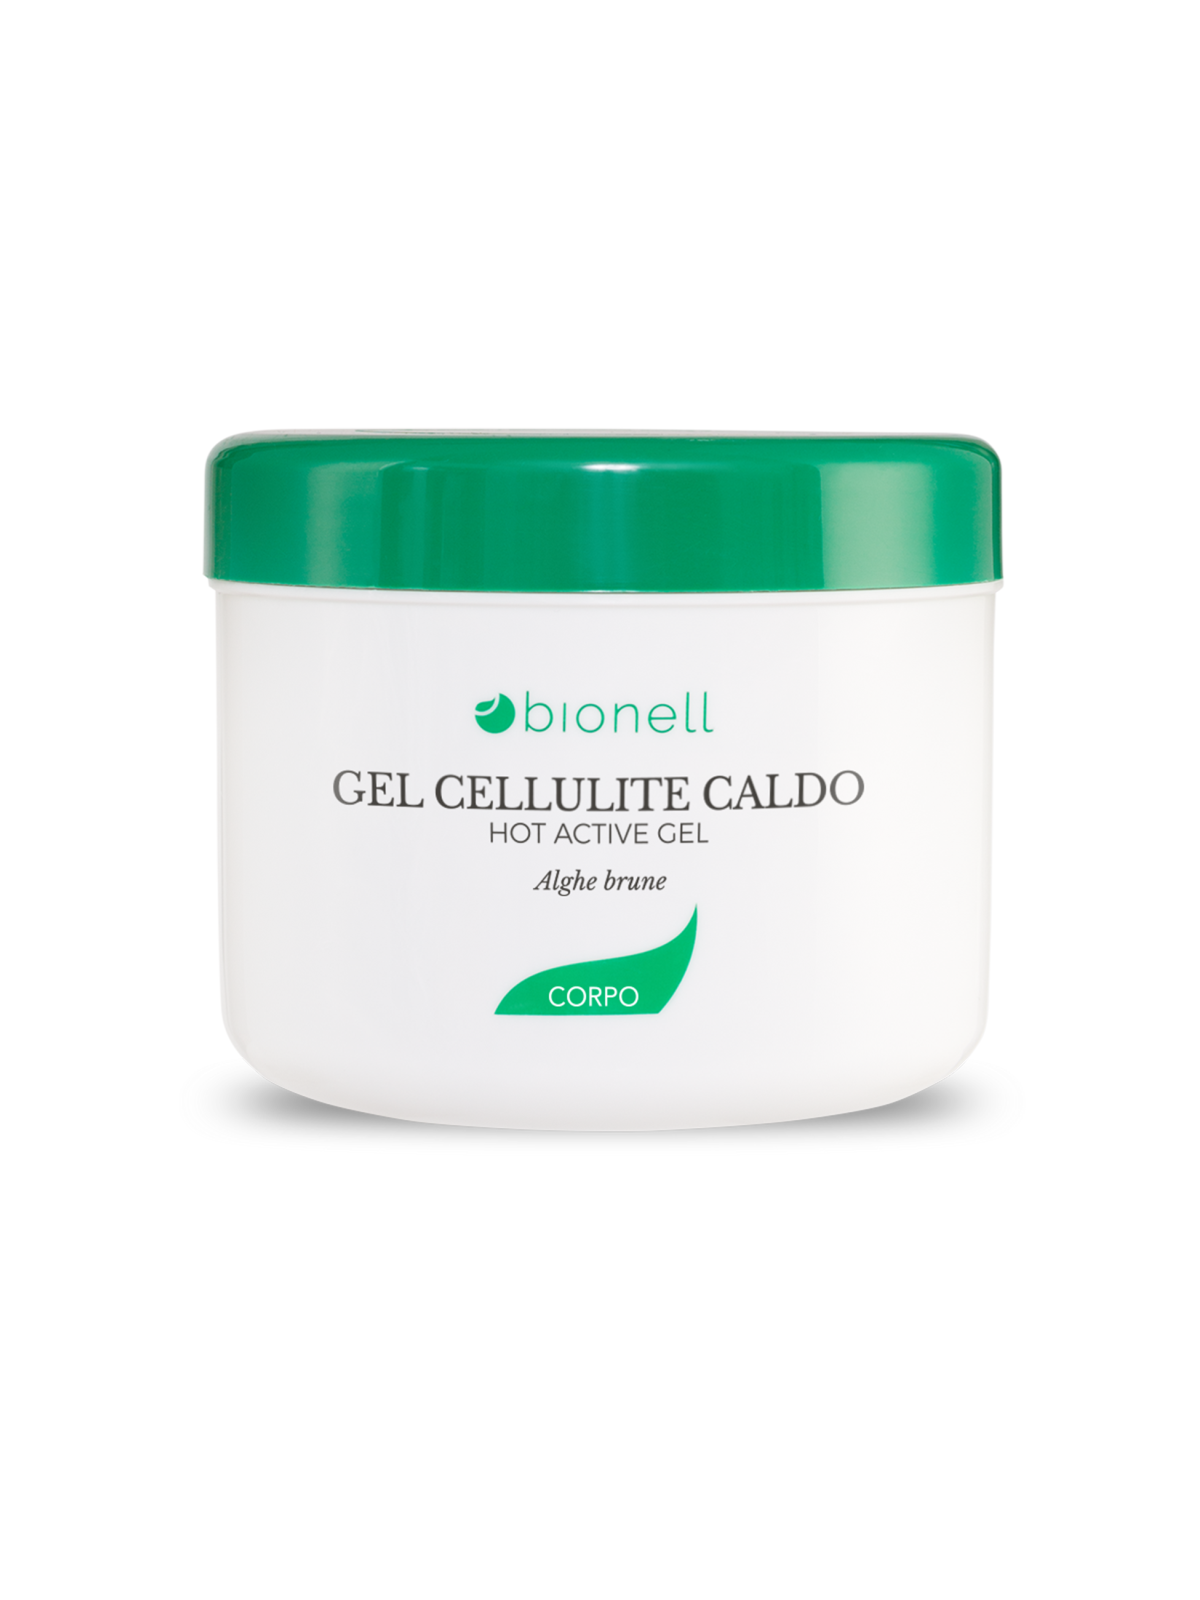 Bionell Gel cellulite caldo 500 ml14,00 €